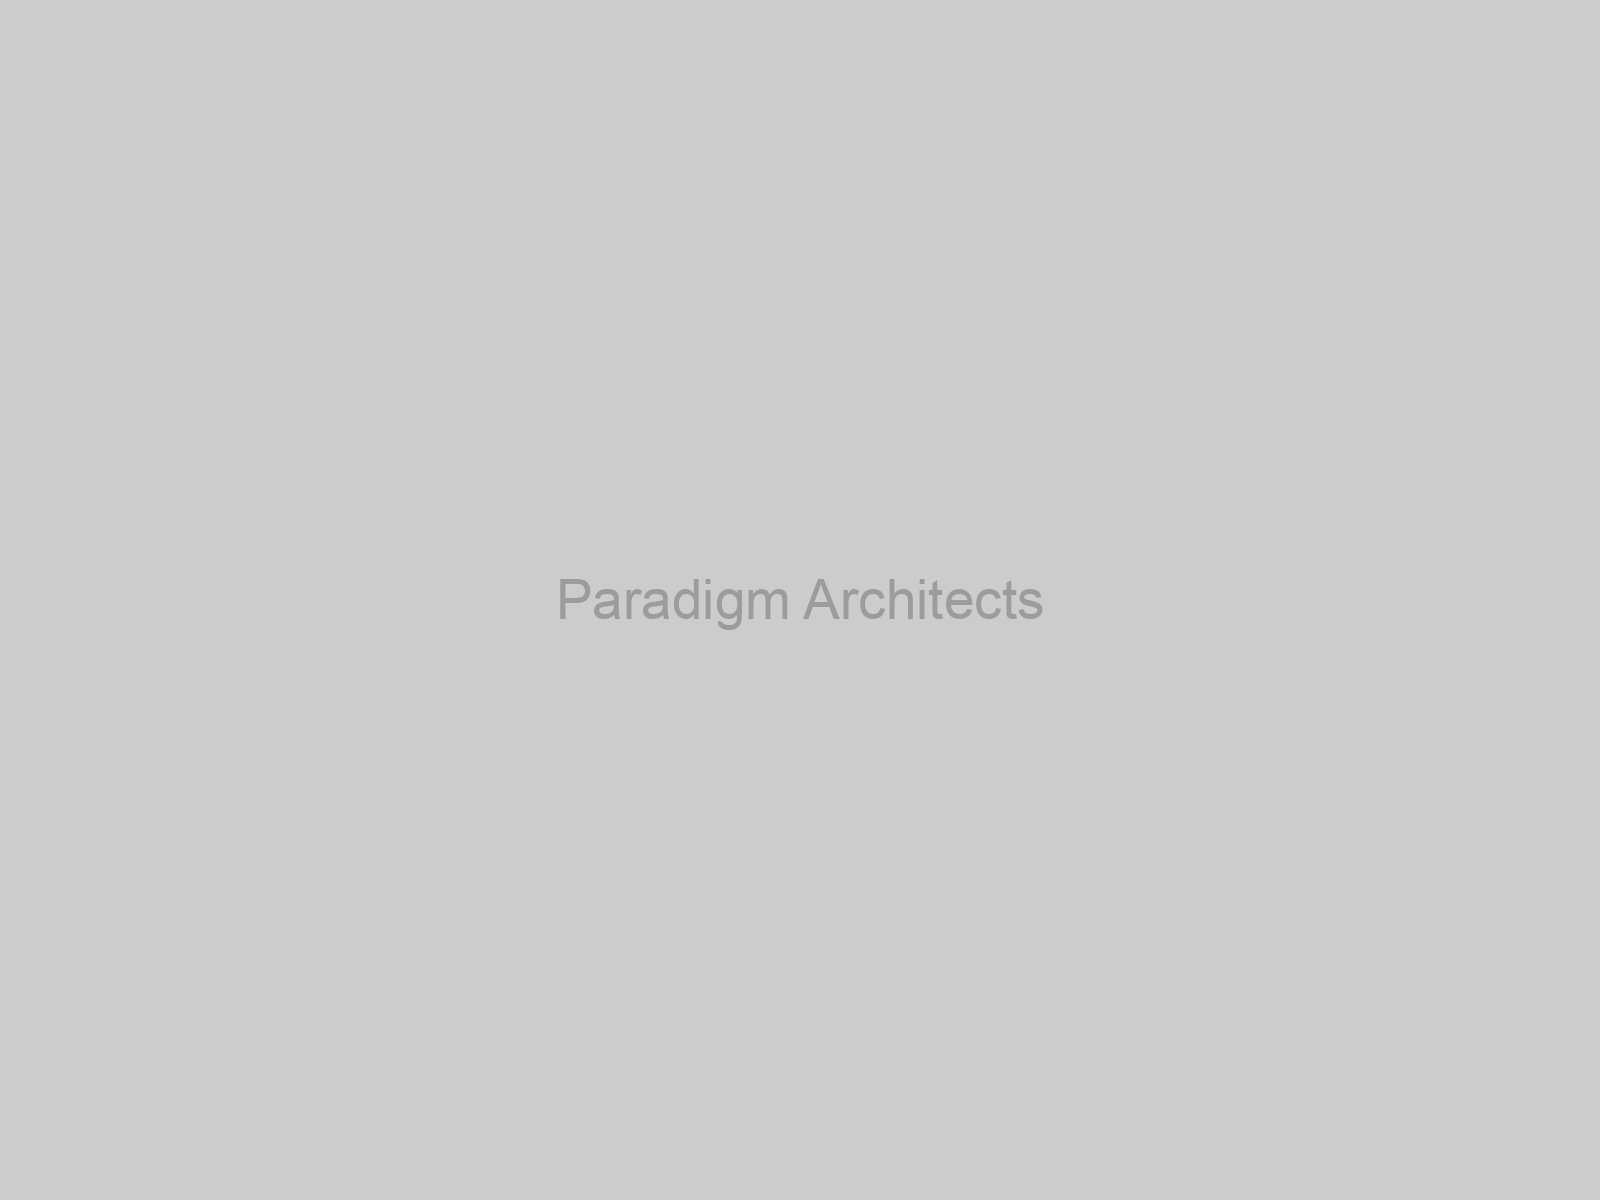 Paradigm Architects